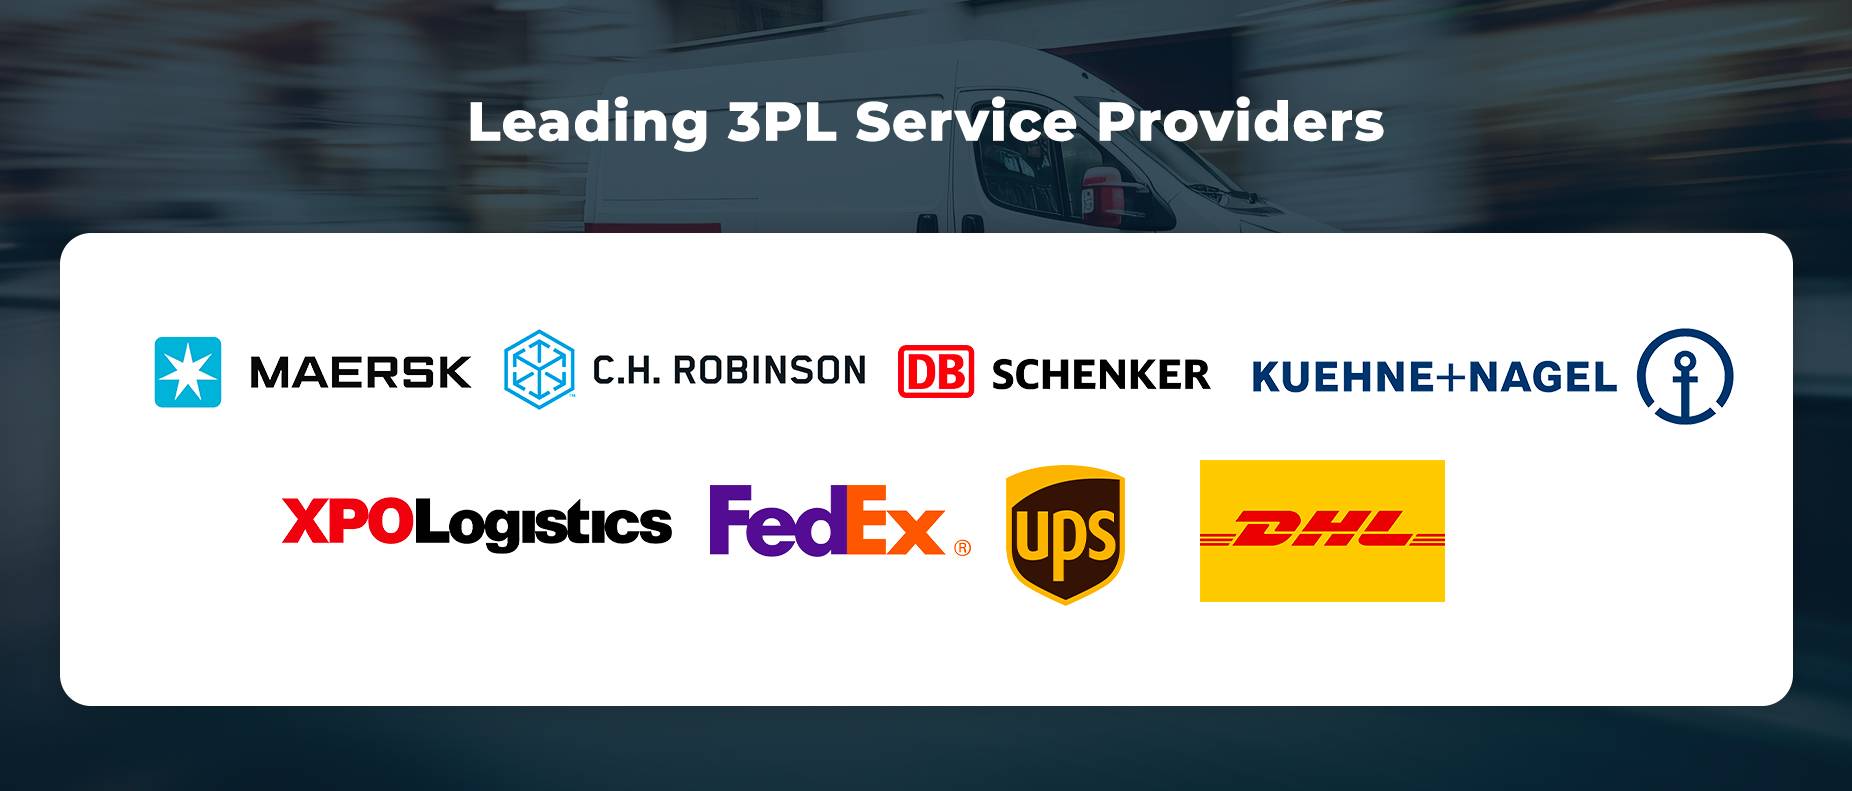 Toonaangevende 3PL-serviceproviders